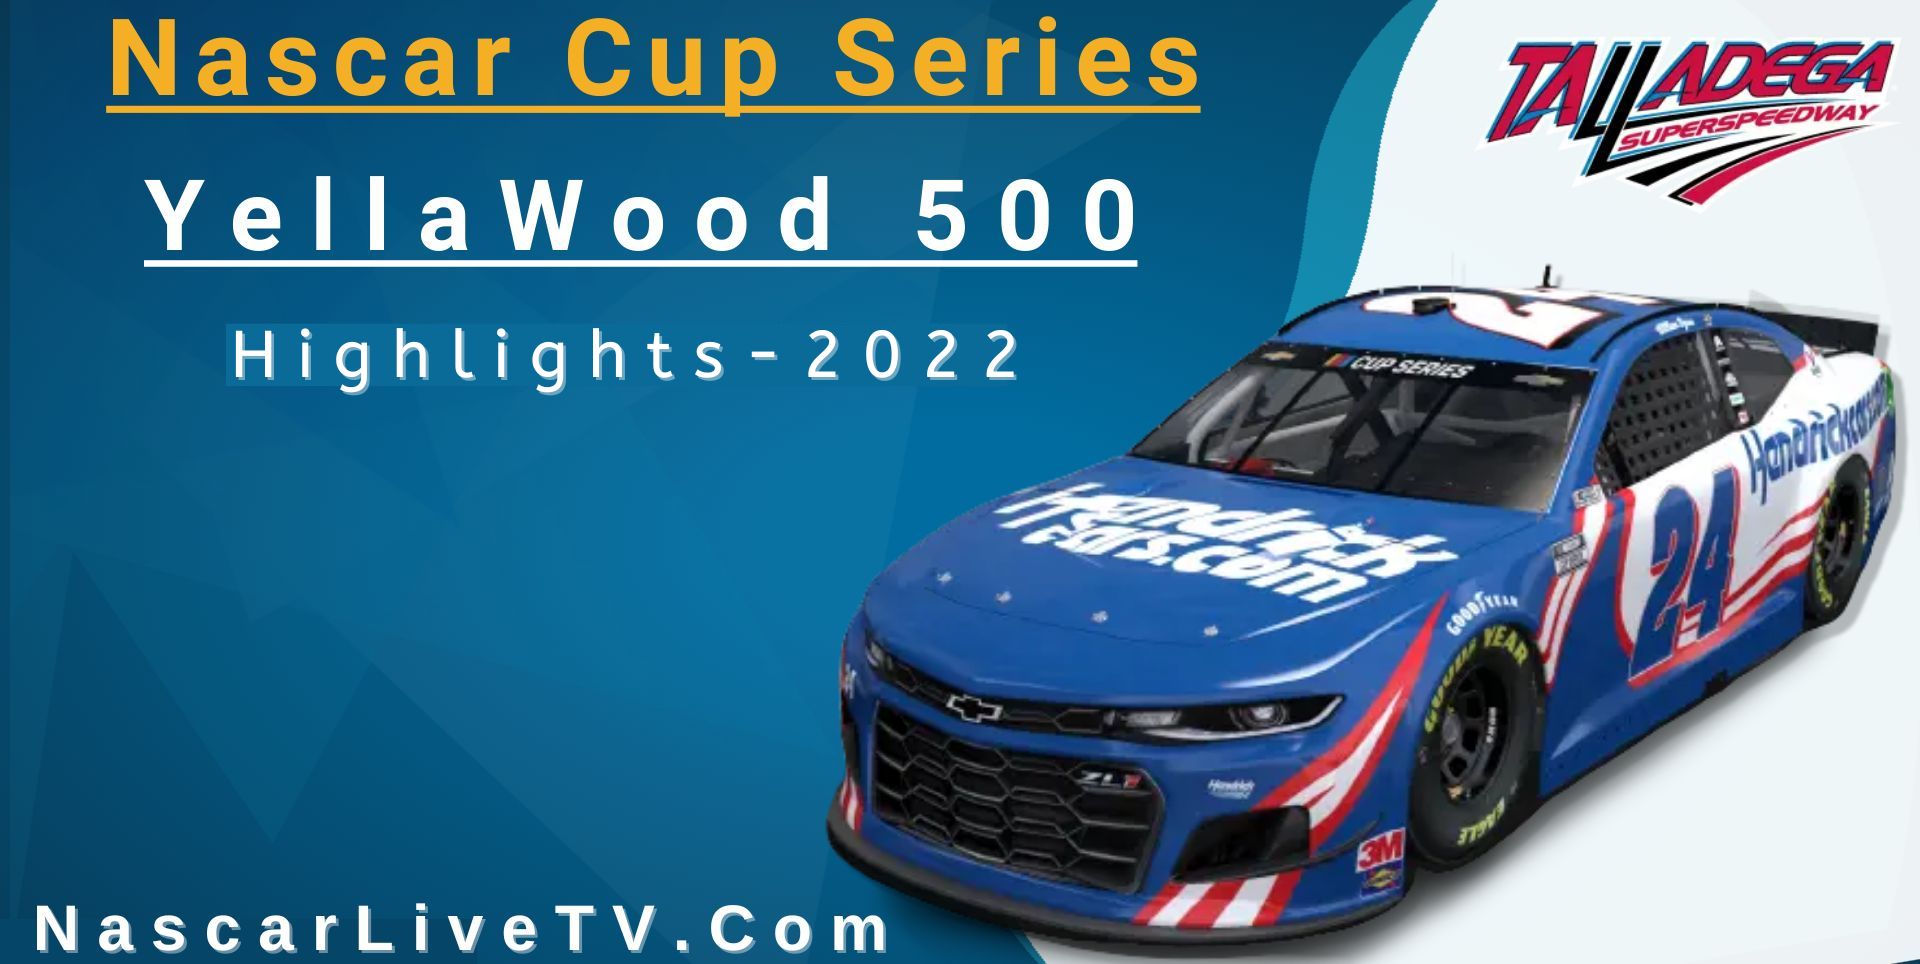 YellaWood 500 Highlights NASCAR Cup Series 2022